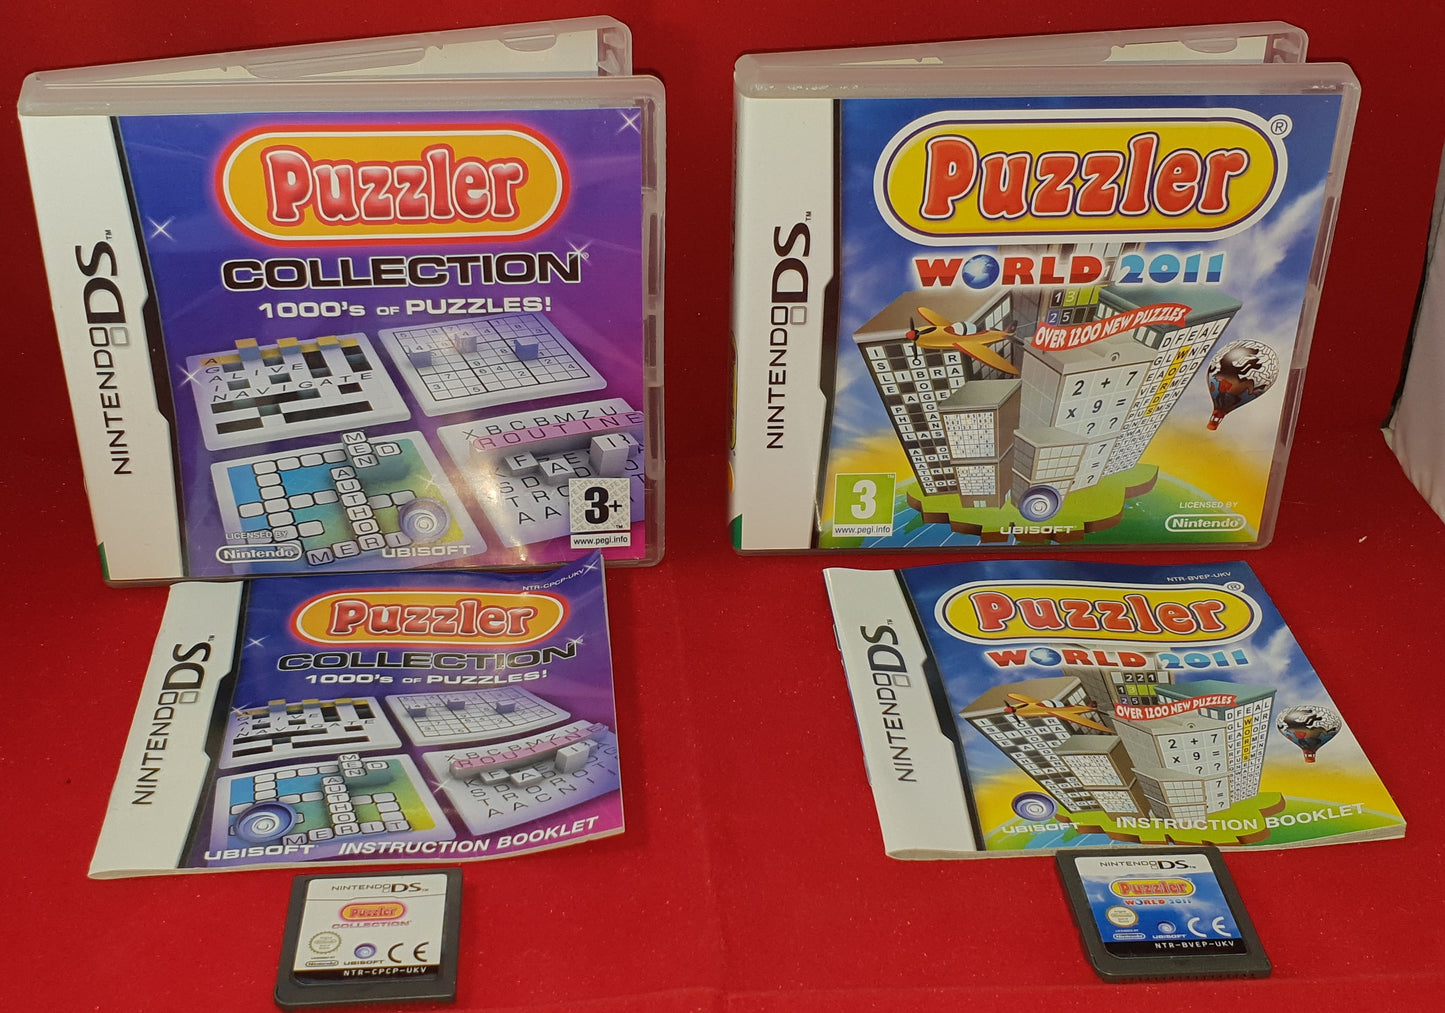 Puzzler Collection & Puzzler World 2011 Nintendo DS Game Bundle